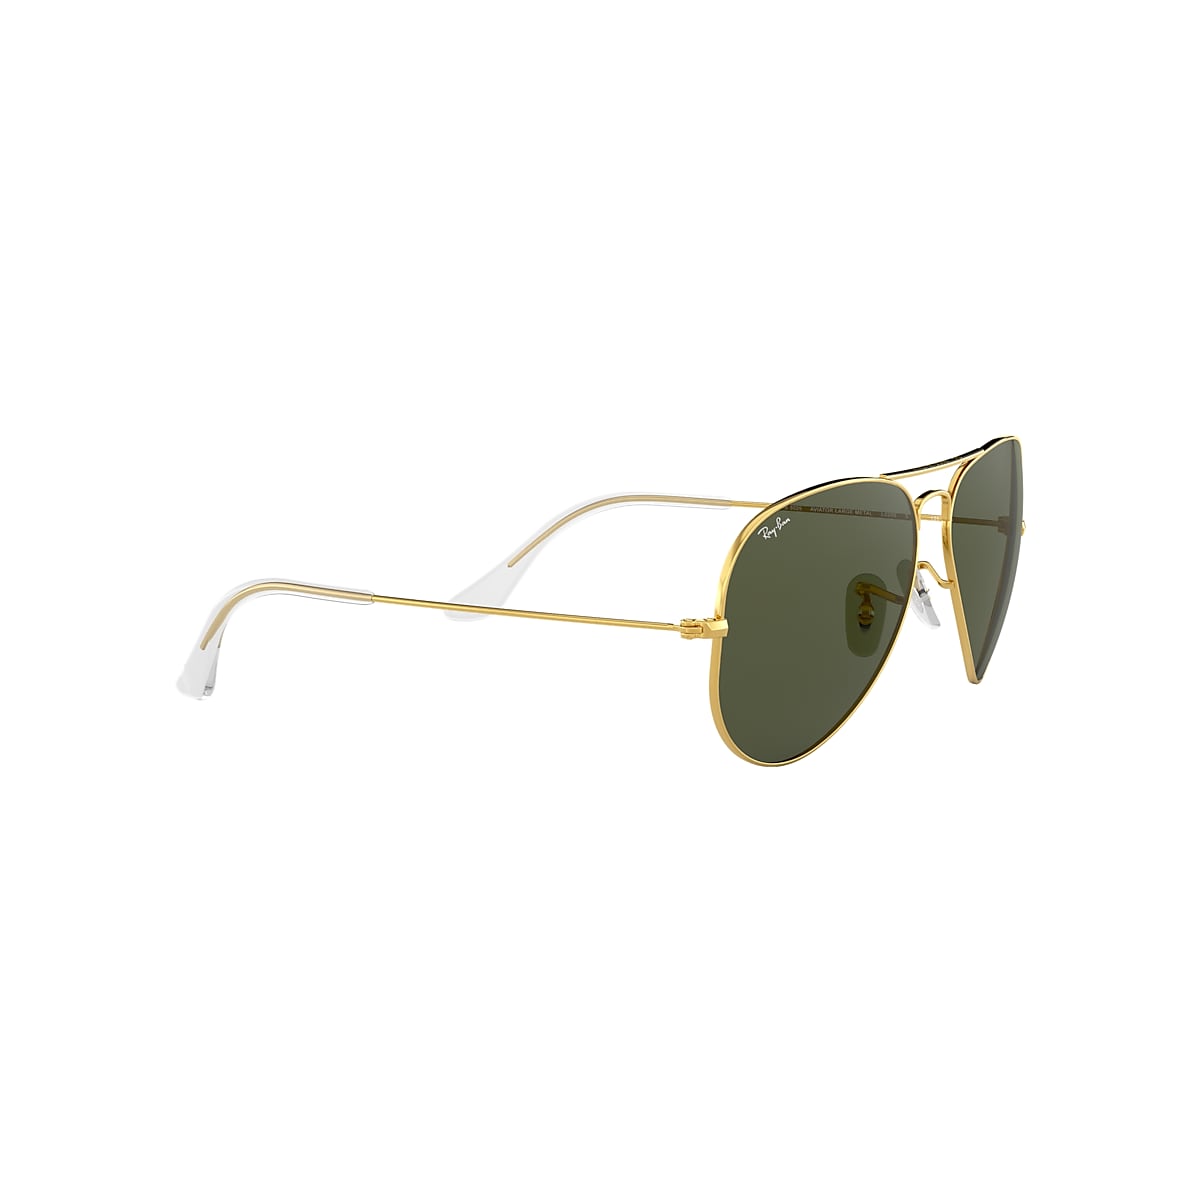 Ray Ban Aviator Classic Sunglasses